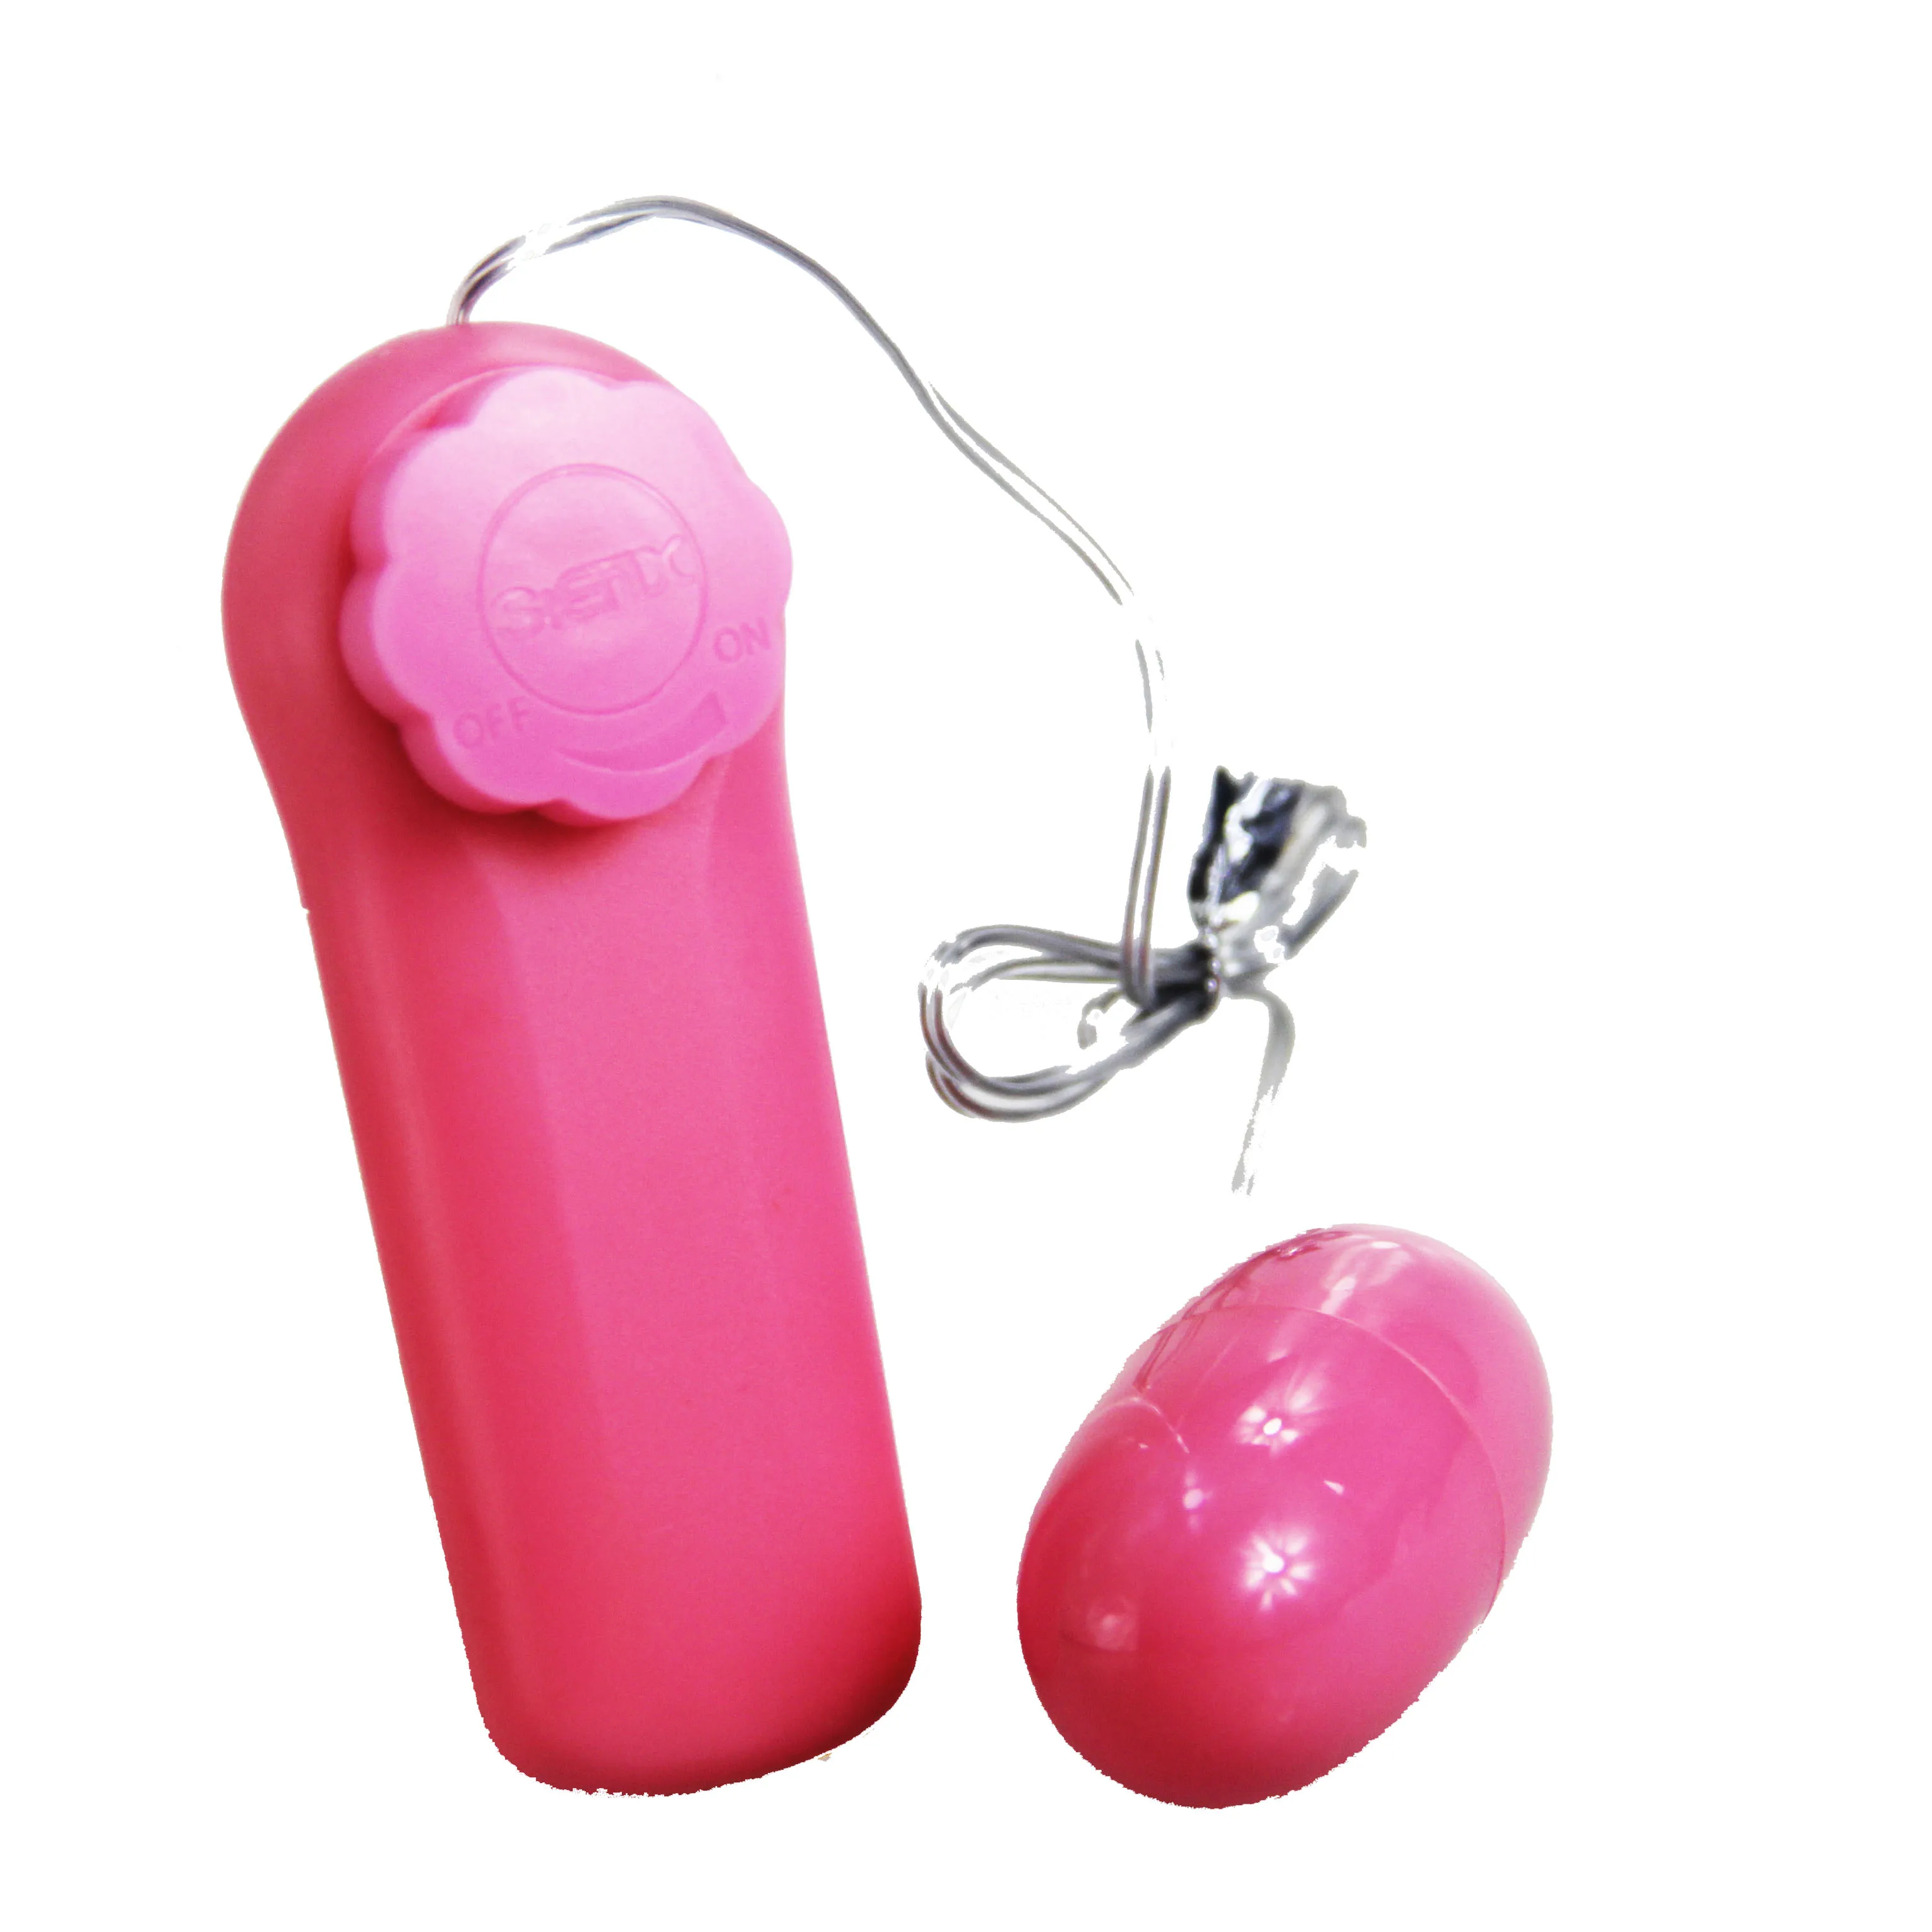 

Tiny Jump Egg Vibrator COUPLE LOVER SEX GAME Bullet Vibrator Clitoral G Spot Stimulation CVT multi-speed Anal plug Toys Women